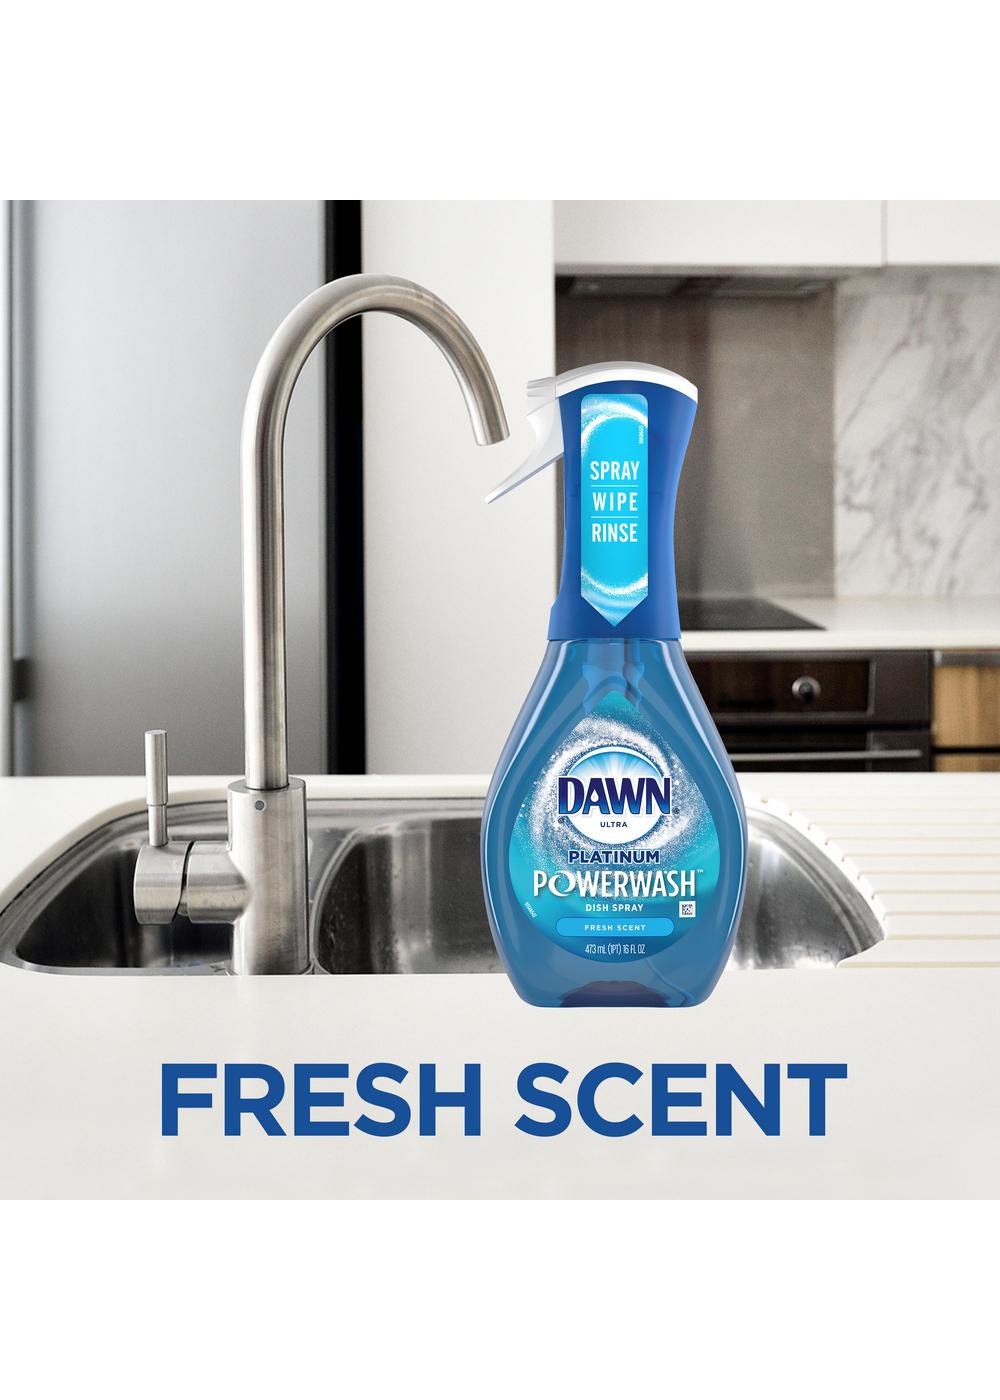 Dawn Powerwash Platinum Fresh Scent Dish Spray; image 11 of 11